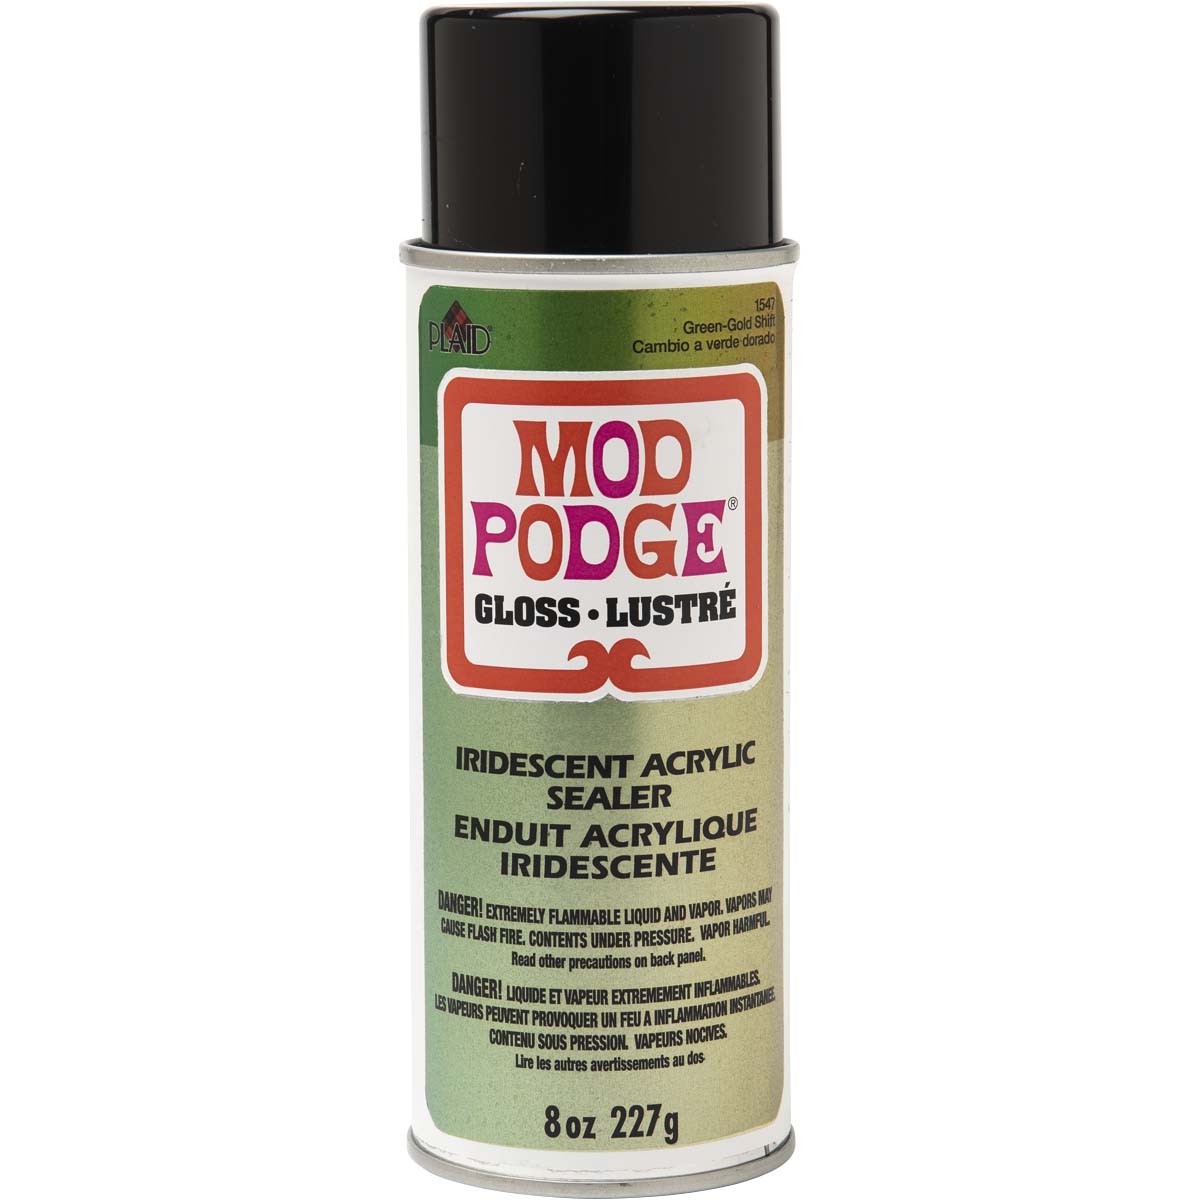 Mod Podge Gloss Lustre Finish - Acrylic Sealer